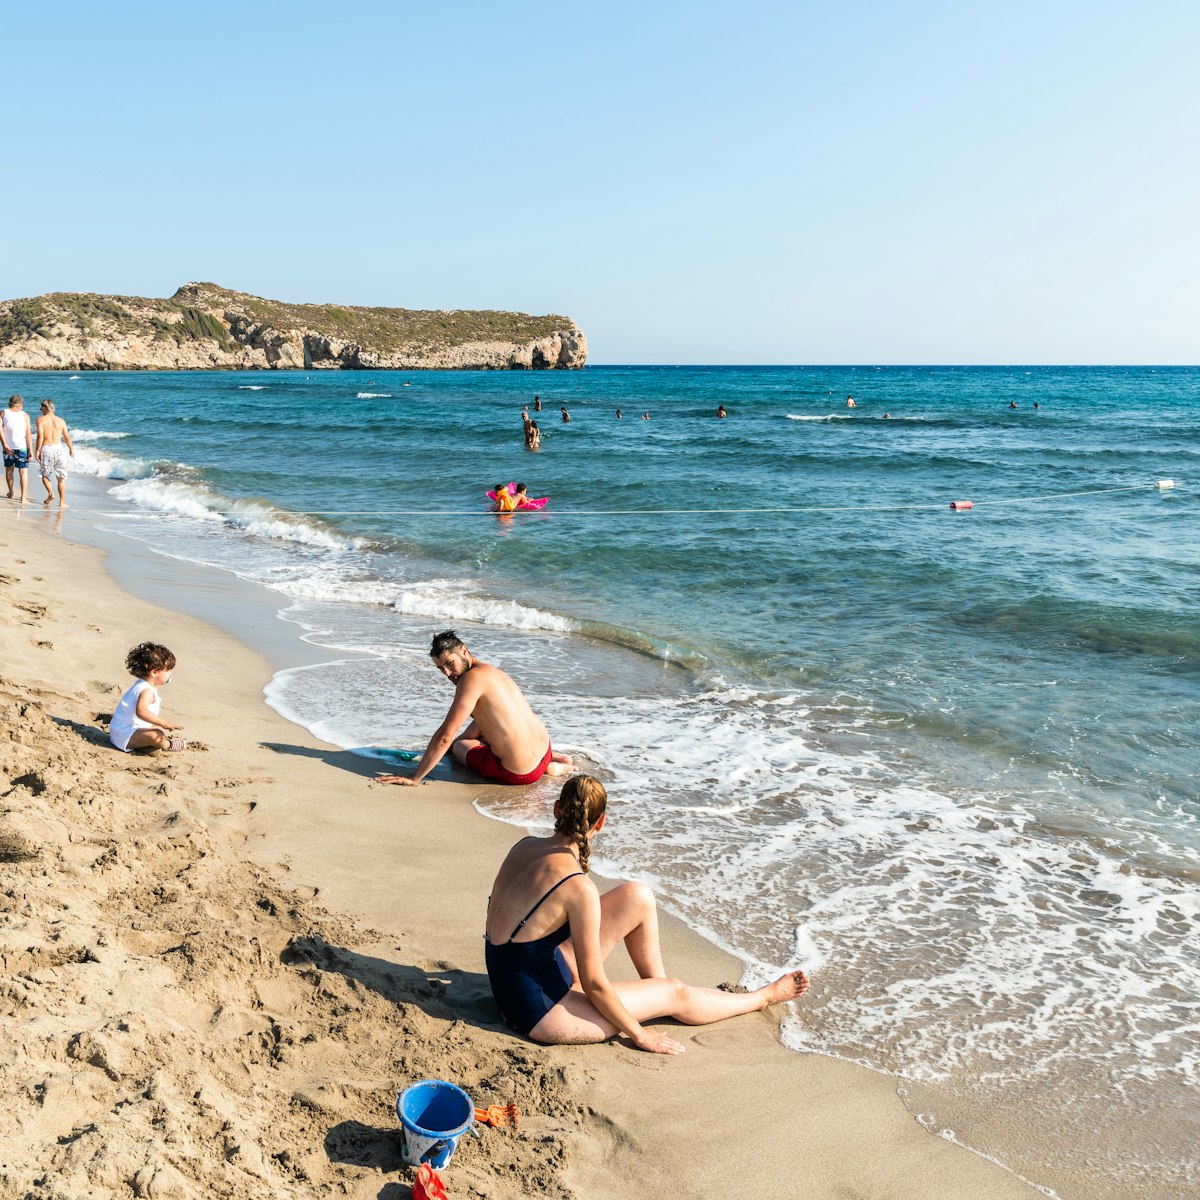 Patara beach in Antalya province of Turkey.